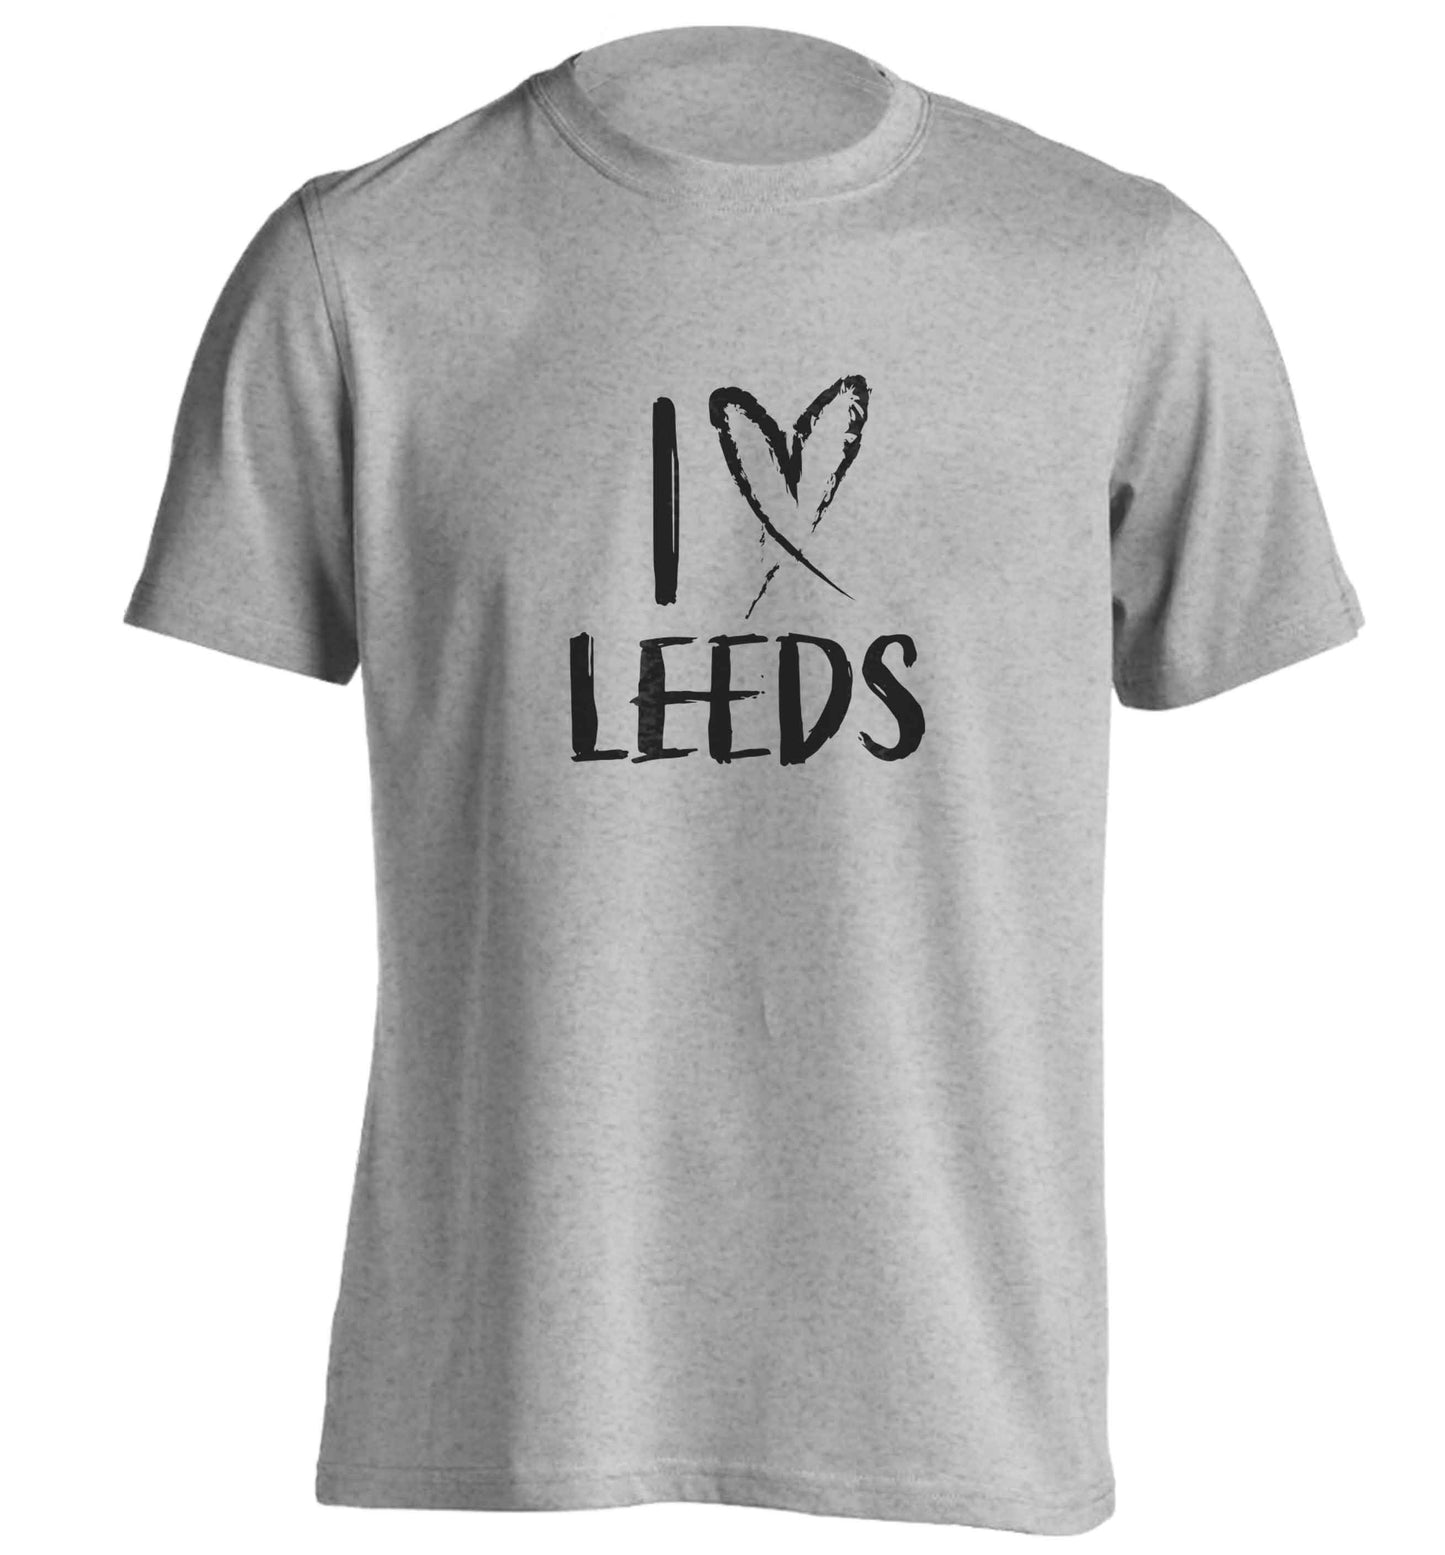 I love Leeds adults unisex grey Tshirt 2XL